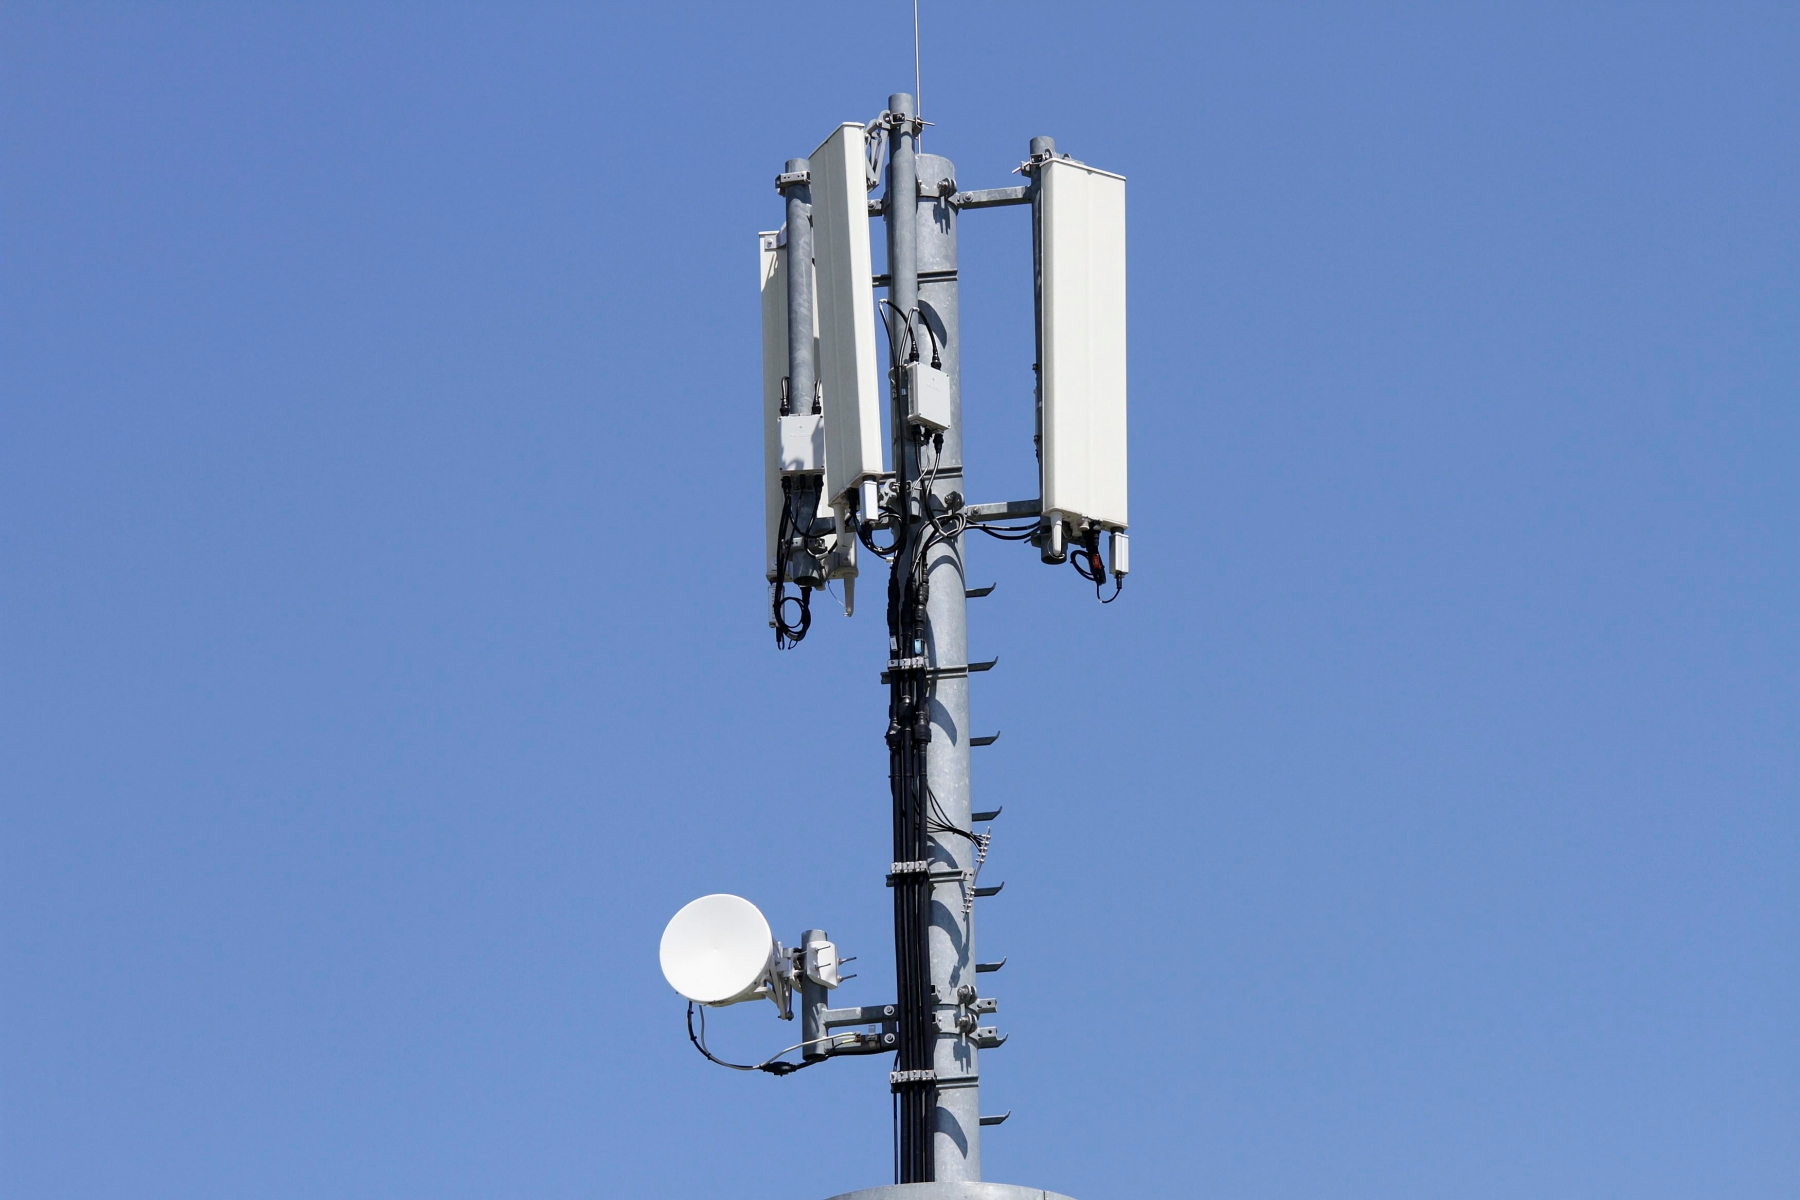 Gland. Lundi 3 Juin 2013.

Antenne relais, communication, swisscom, telephonie.

(Samuel Fromhold) ANTENNE / TELEPHONIE / SWISSCOM